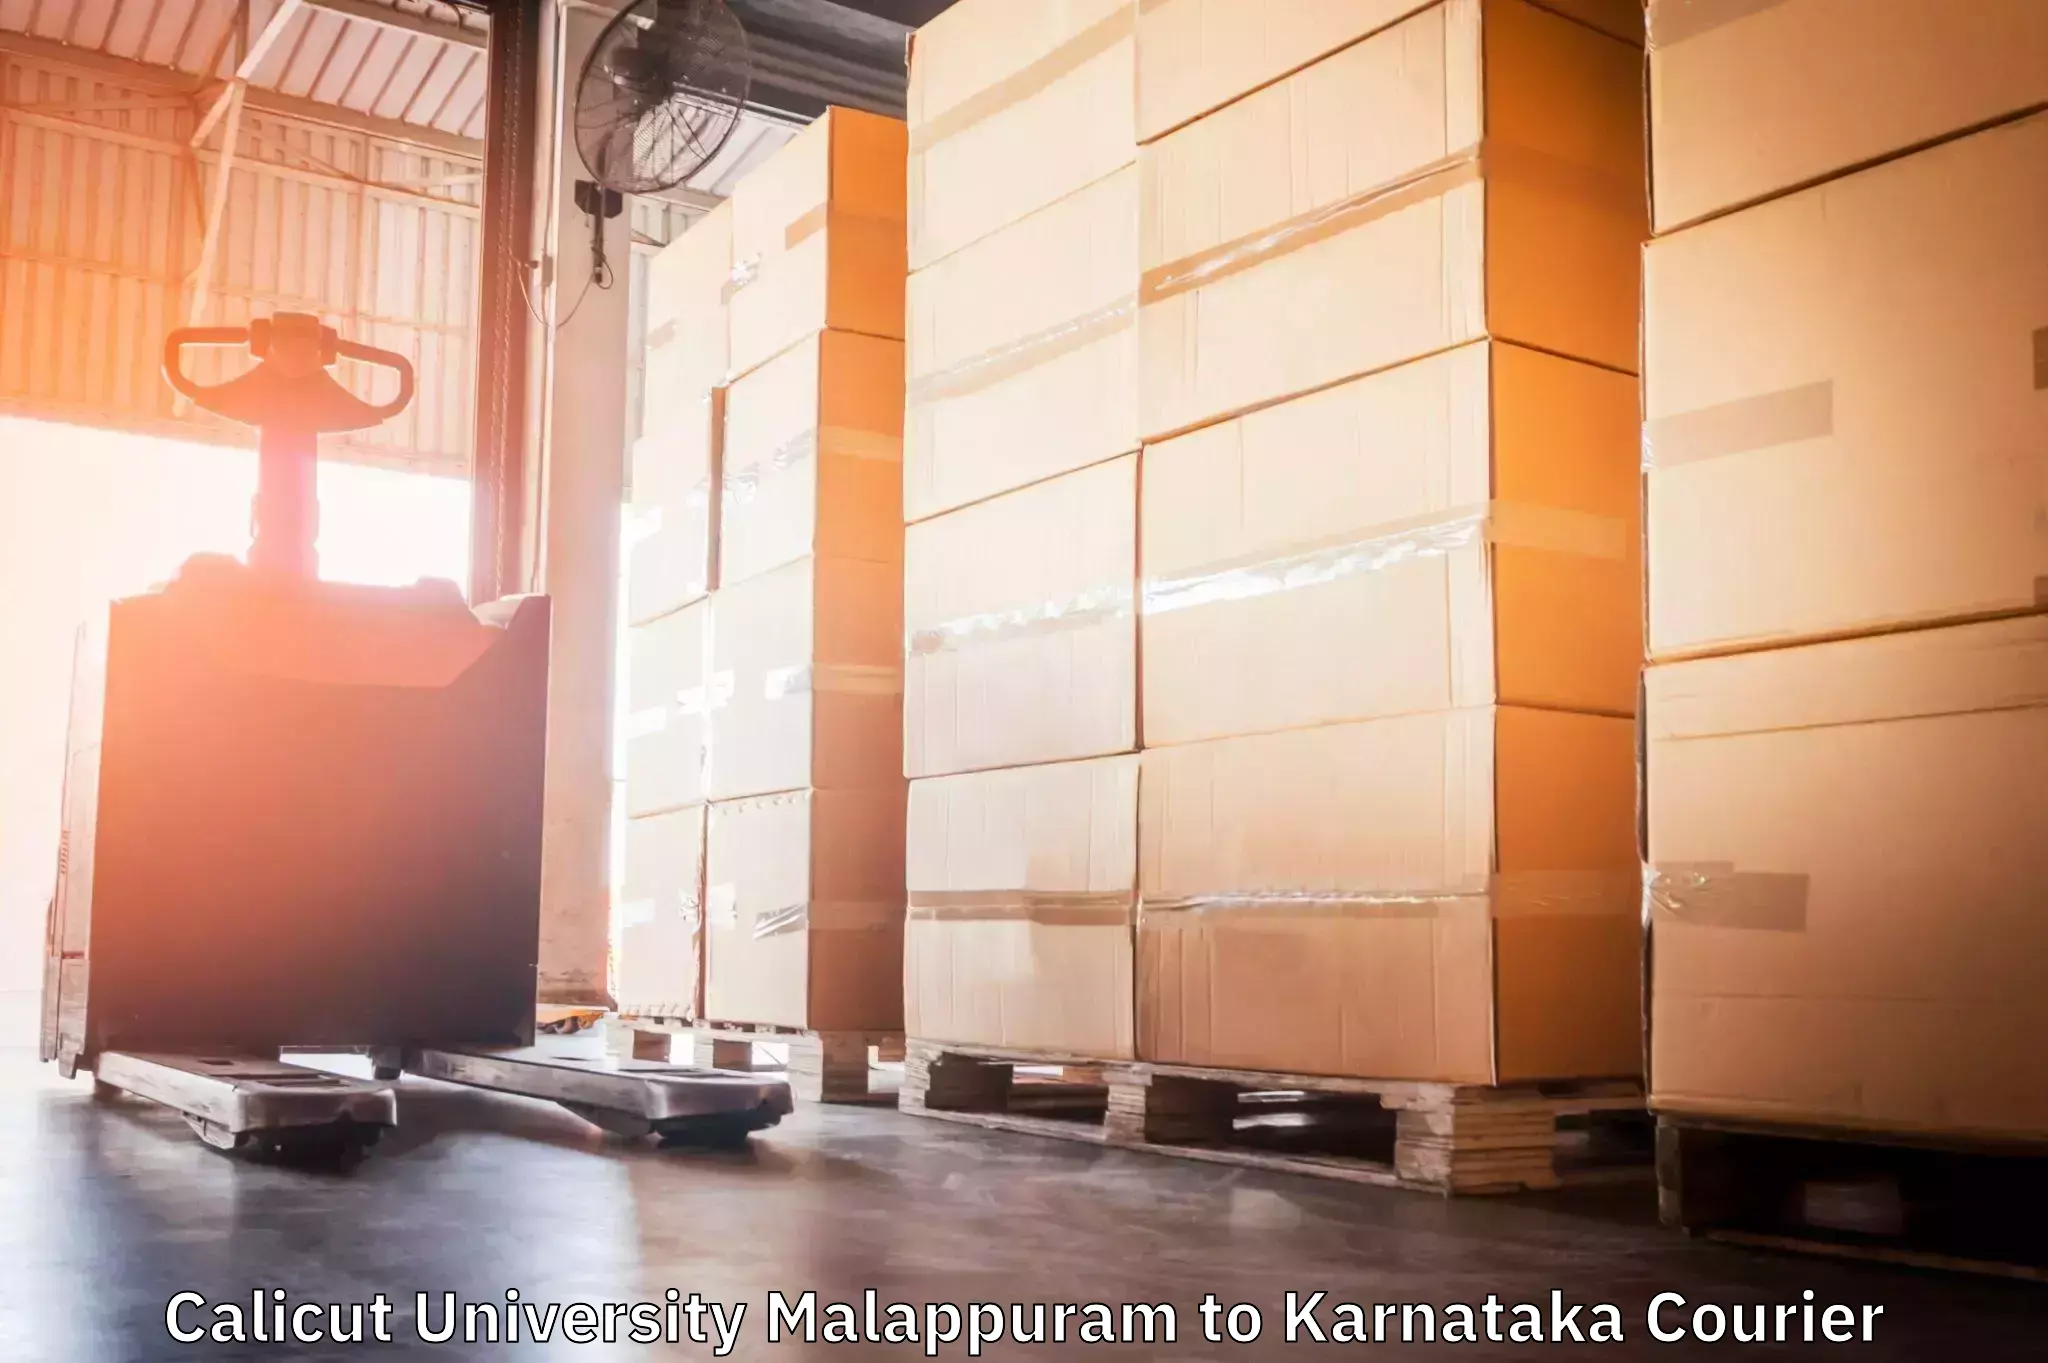 Bulk courier orders Calicut University Malappuram to Piriyapatna